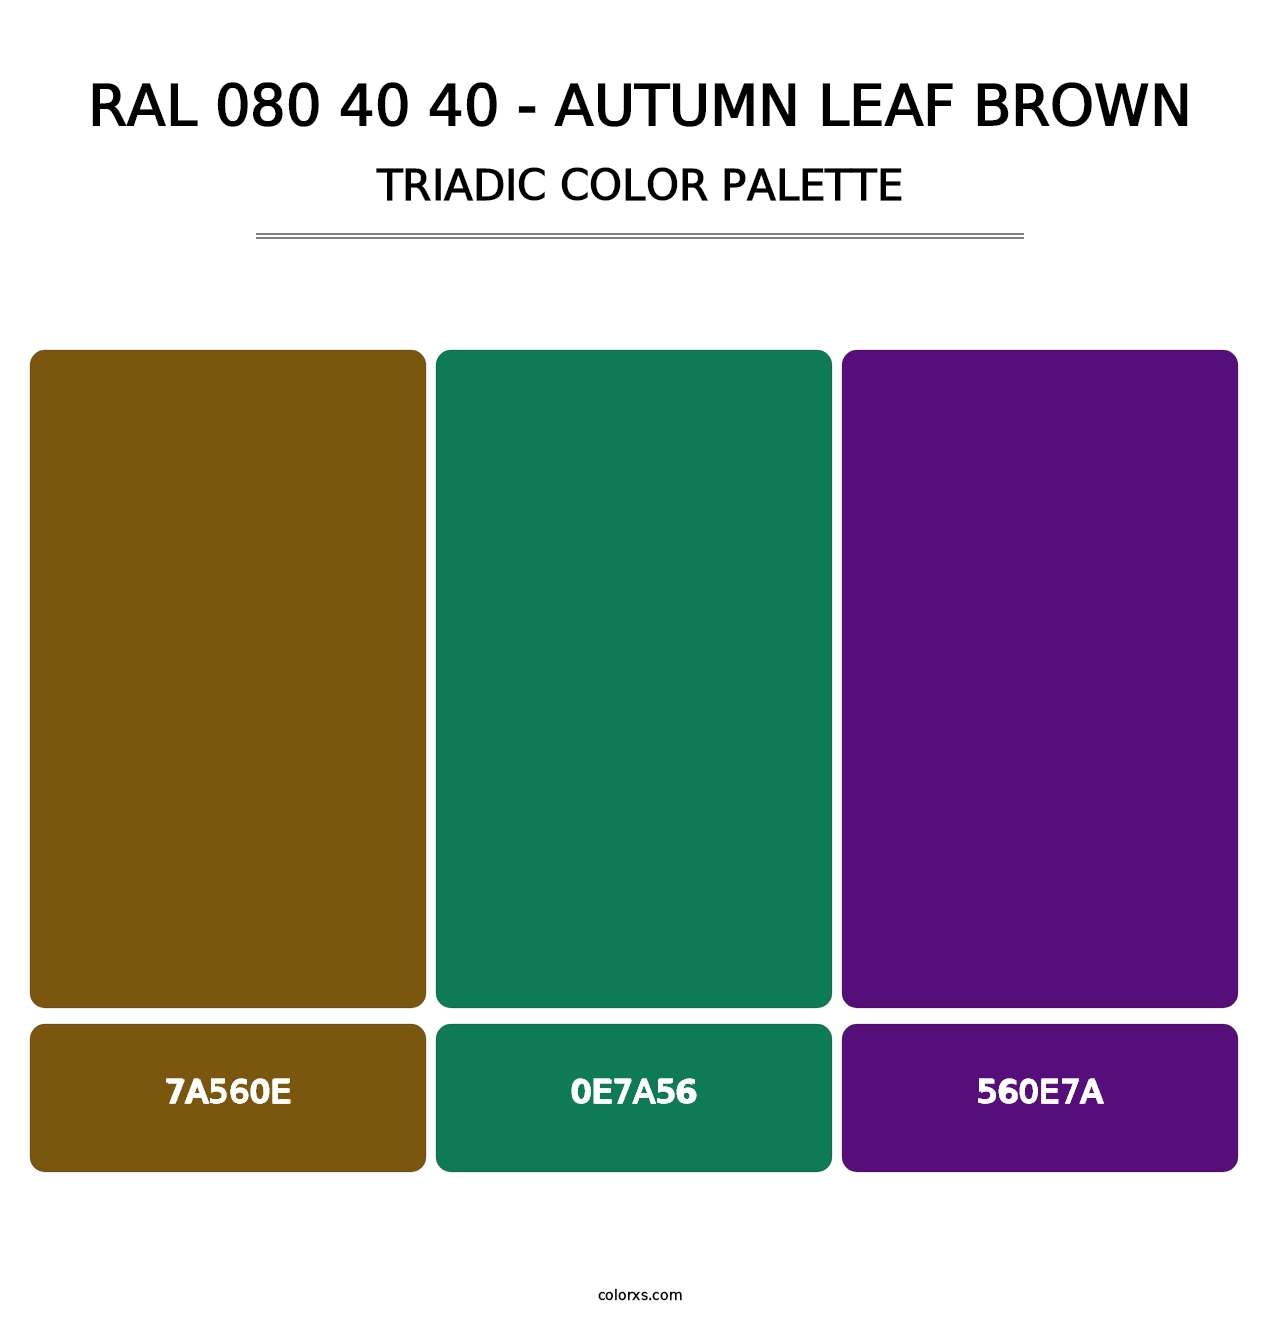 RAL 080 40 40 - Autumn Leaf Brown - Triadic Color Palette